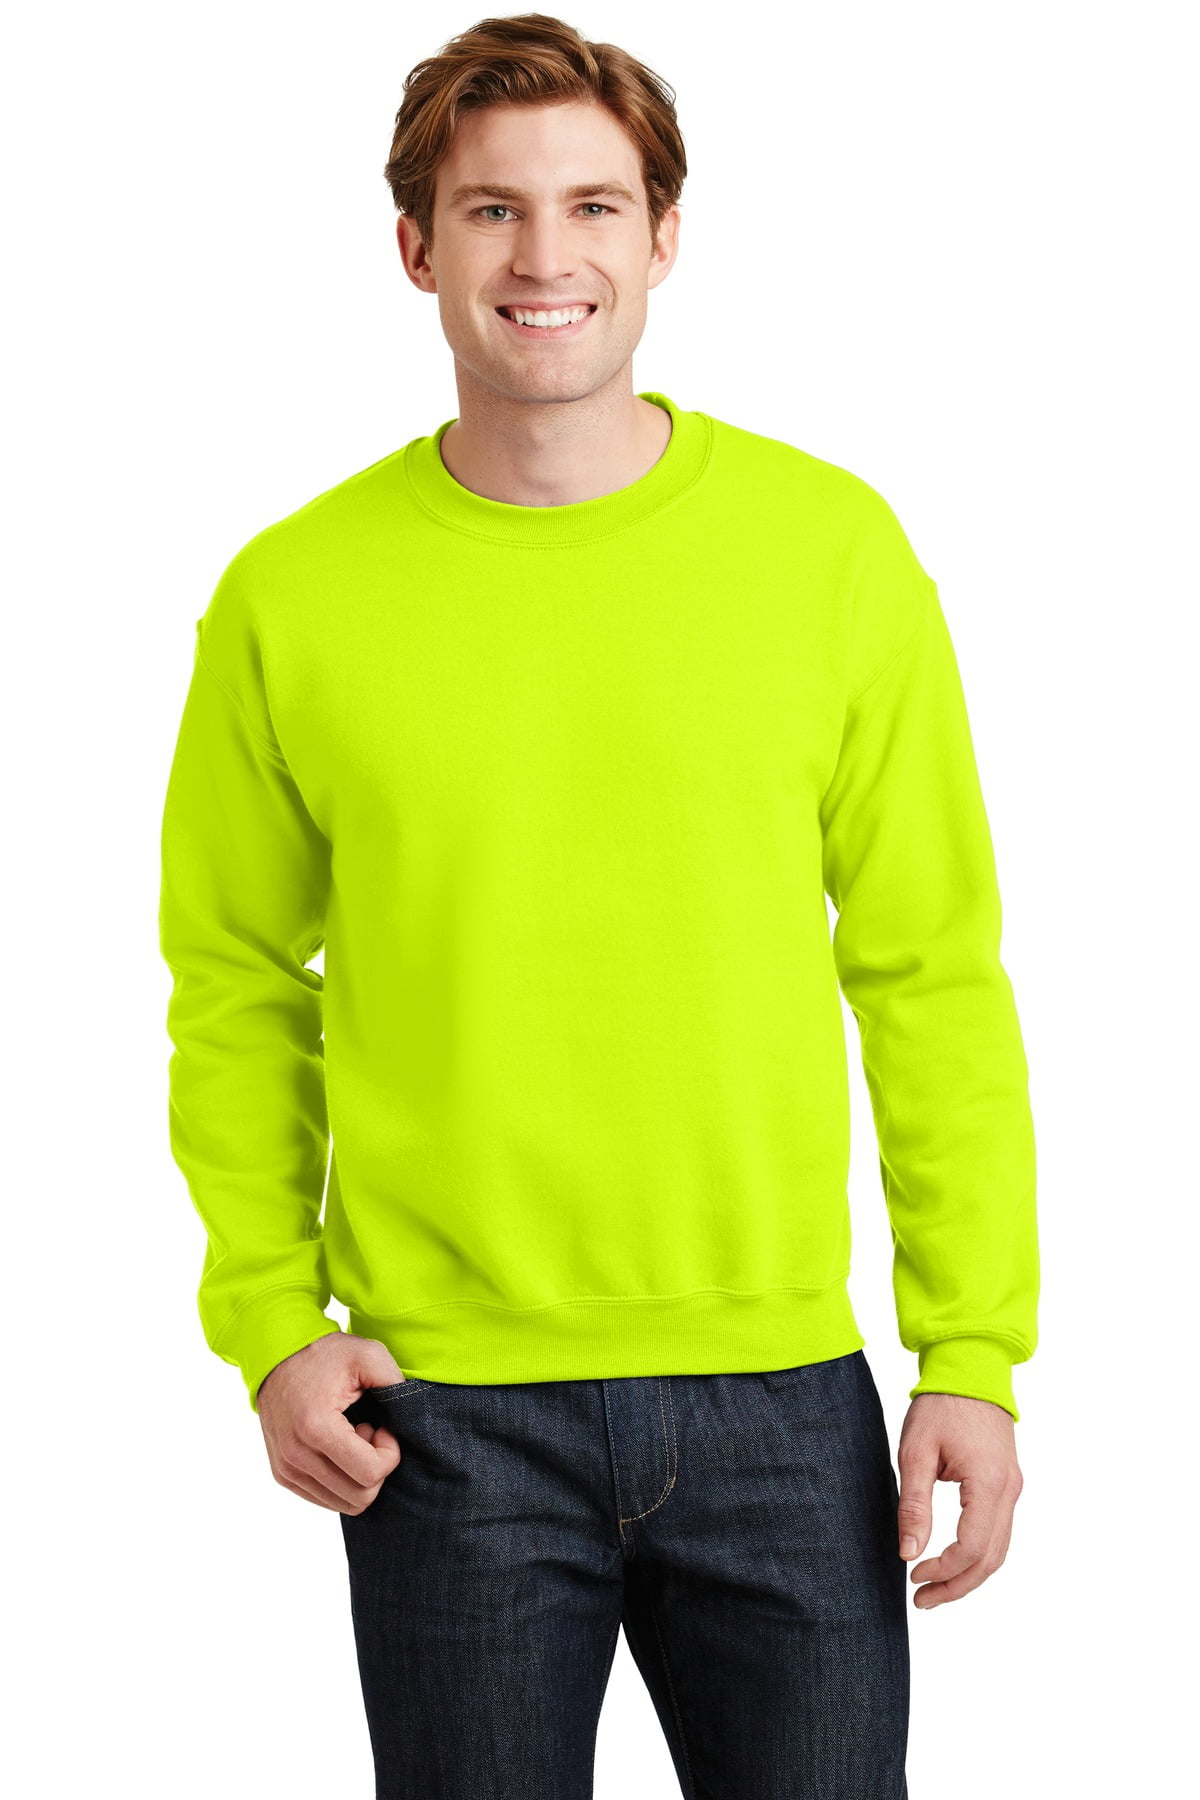 Gildan Men's Fleece Crewneck Sweatshirt, Style G18000, Dark Heather, Small